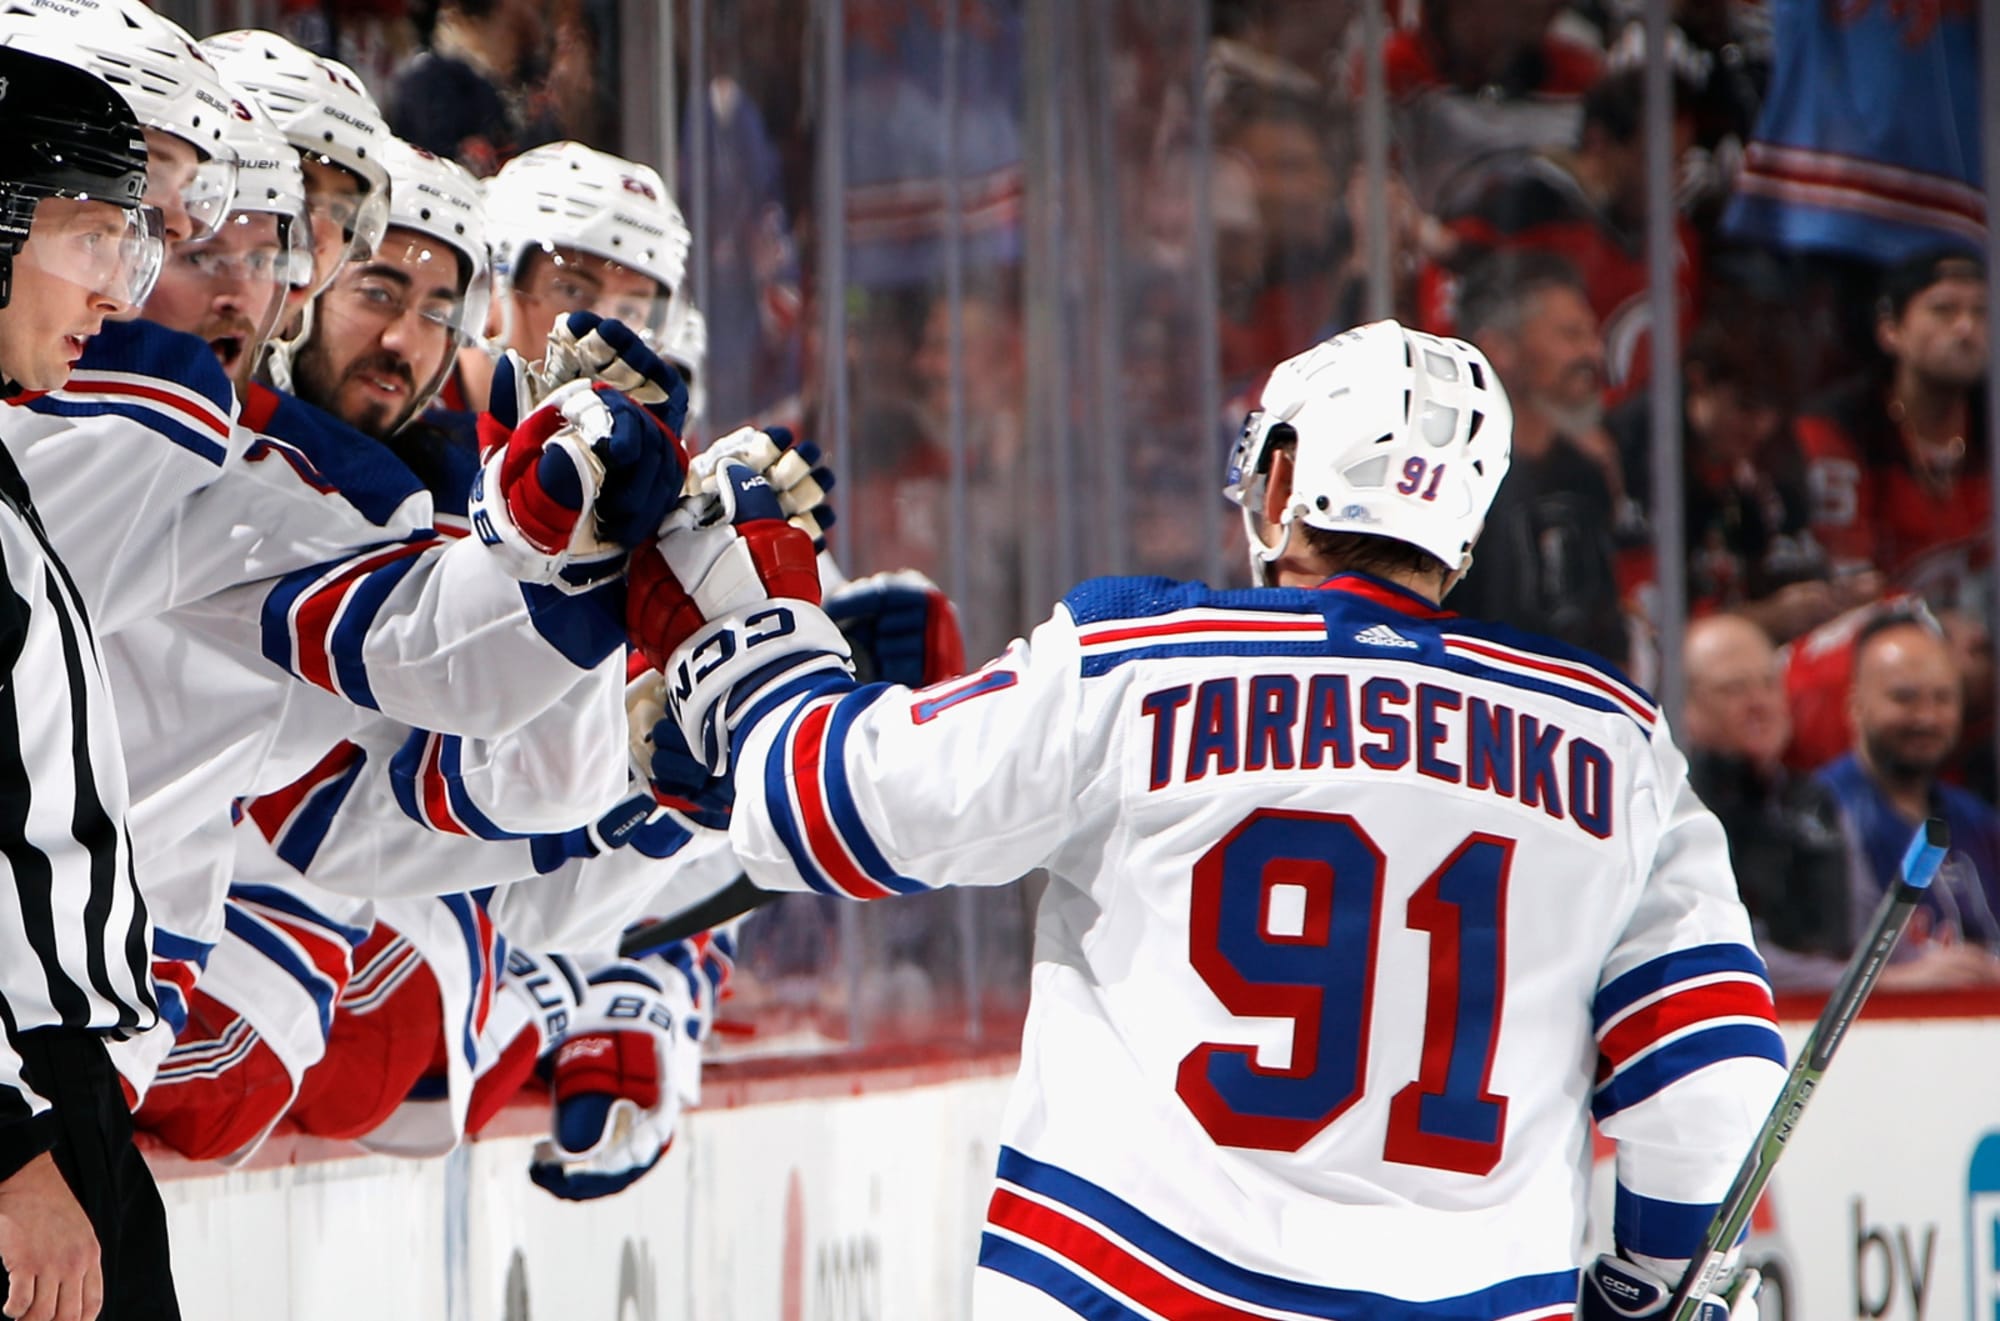 RUMOR: Vladimir Tarasenko could get traded to top Stanley Cup